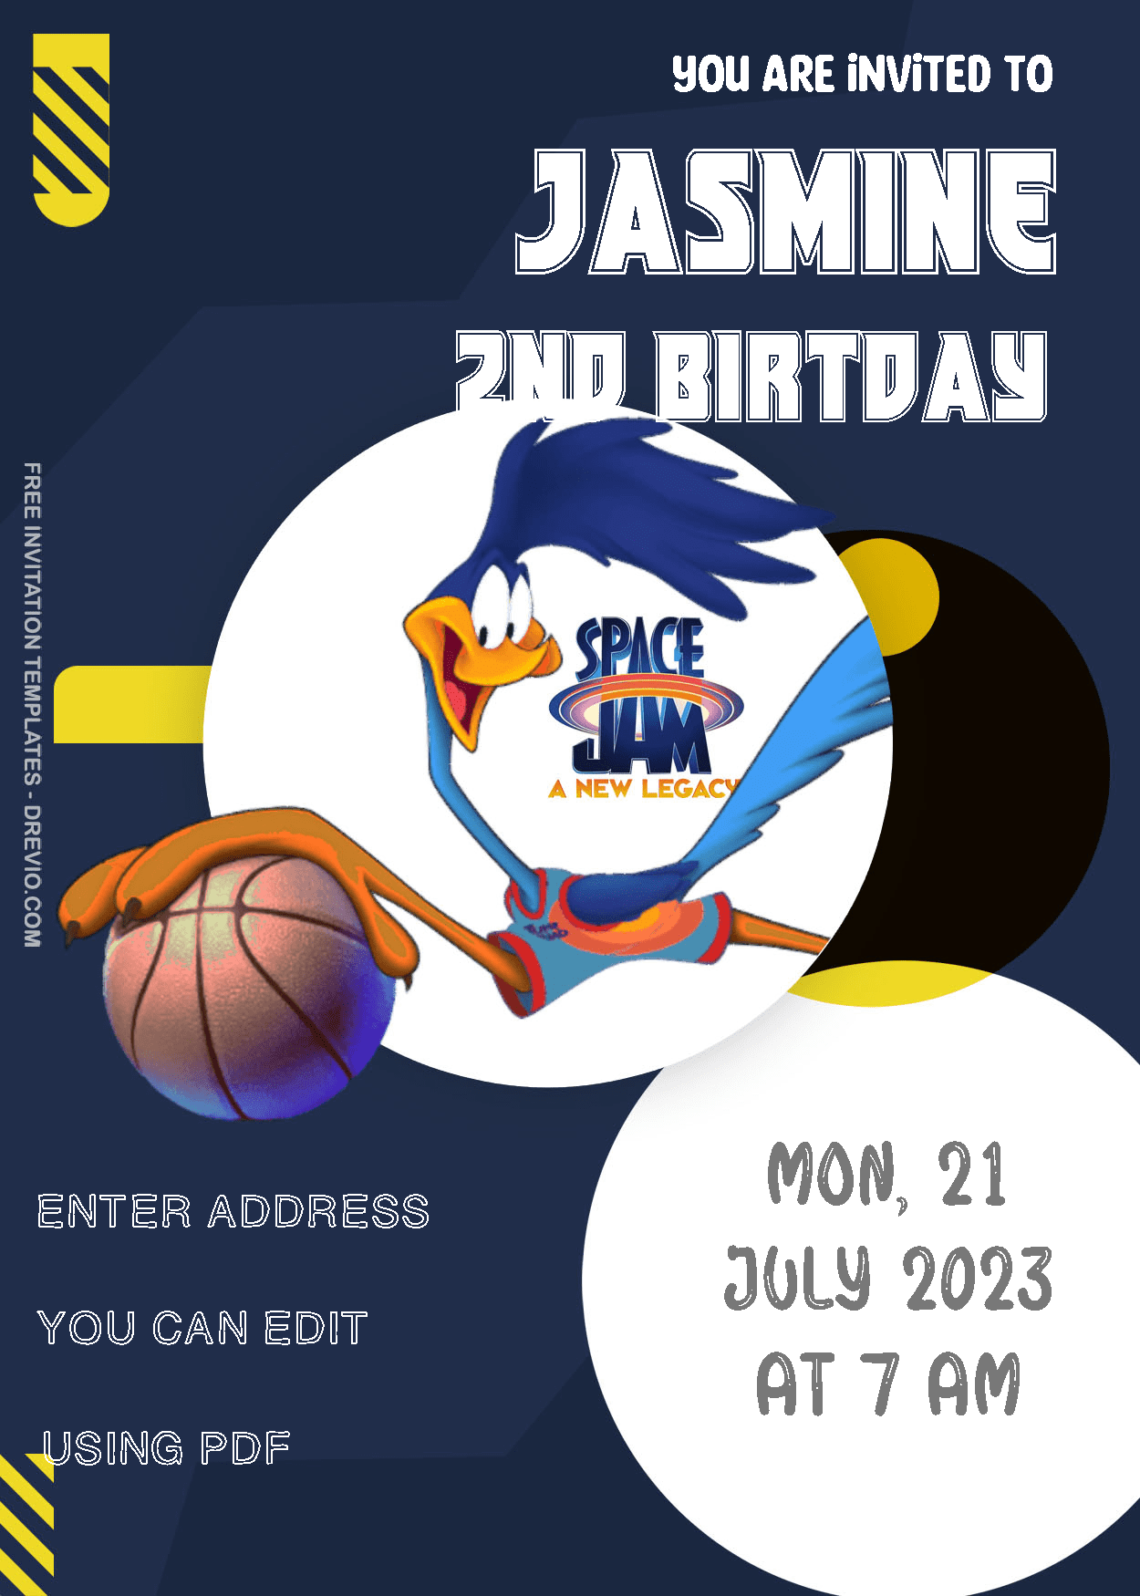 ( Free Editable PDF ) Space Jam Birthday Invitation Templates One